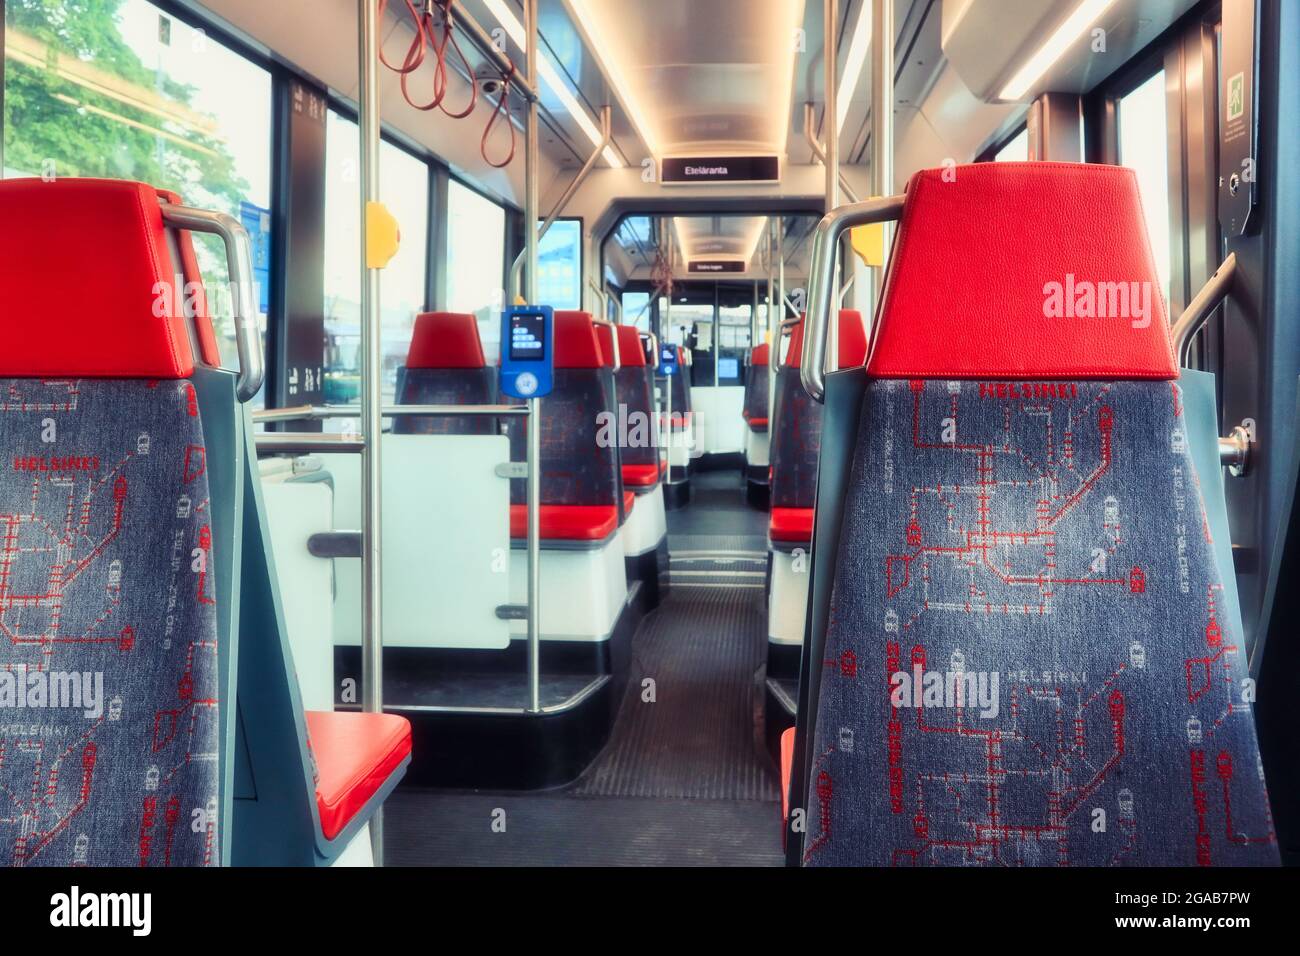 Interior of Helsinki tram car, empty seats with no people present. Helsinki, Finland. July 3, 2020. Stock Photo